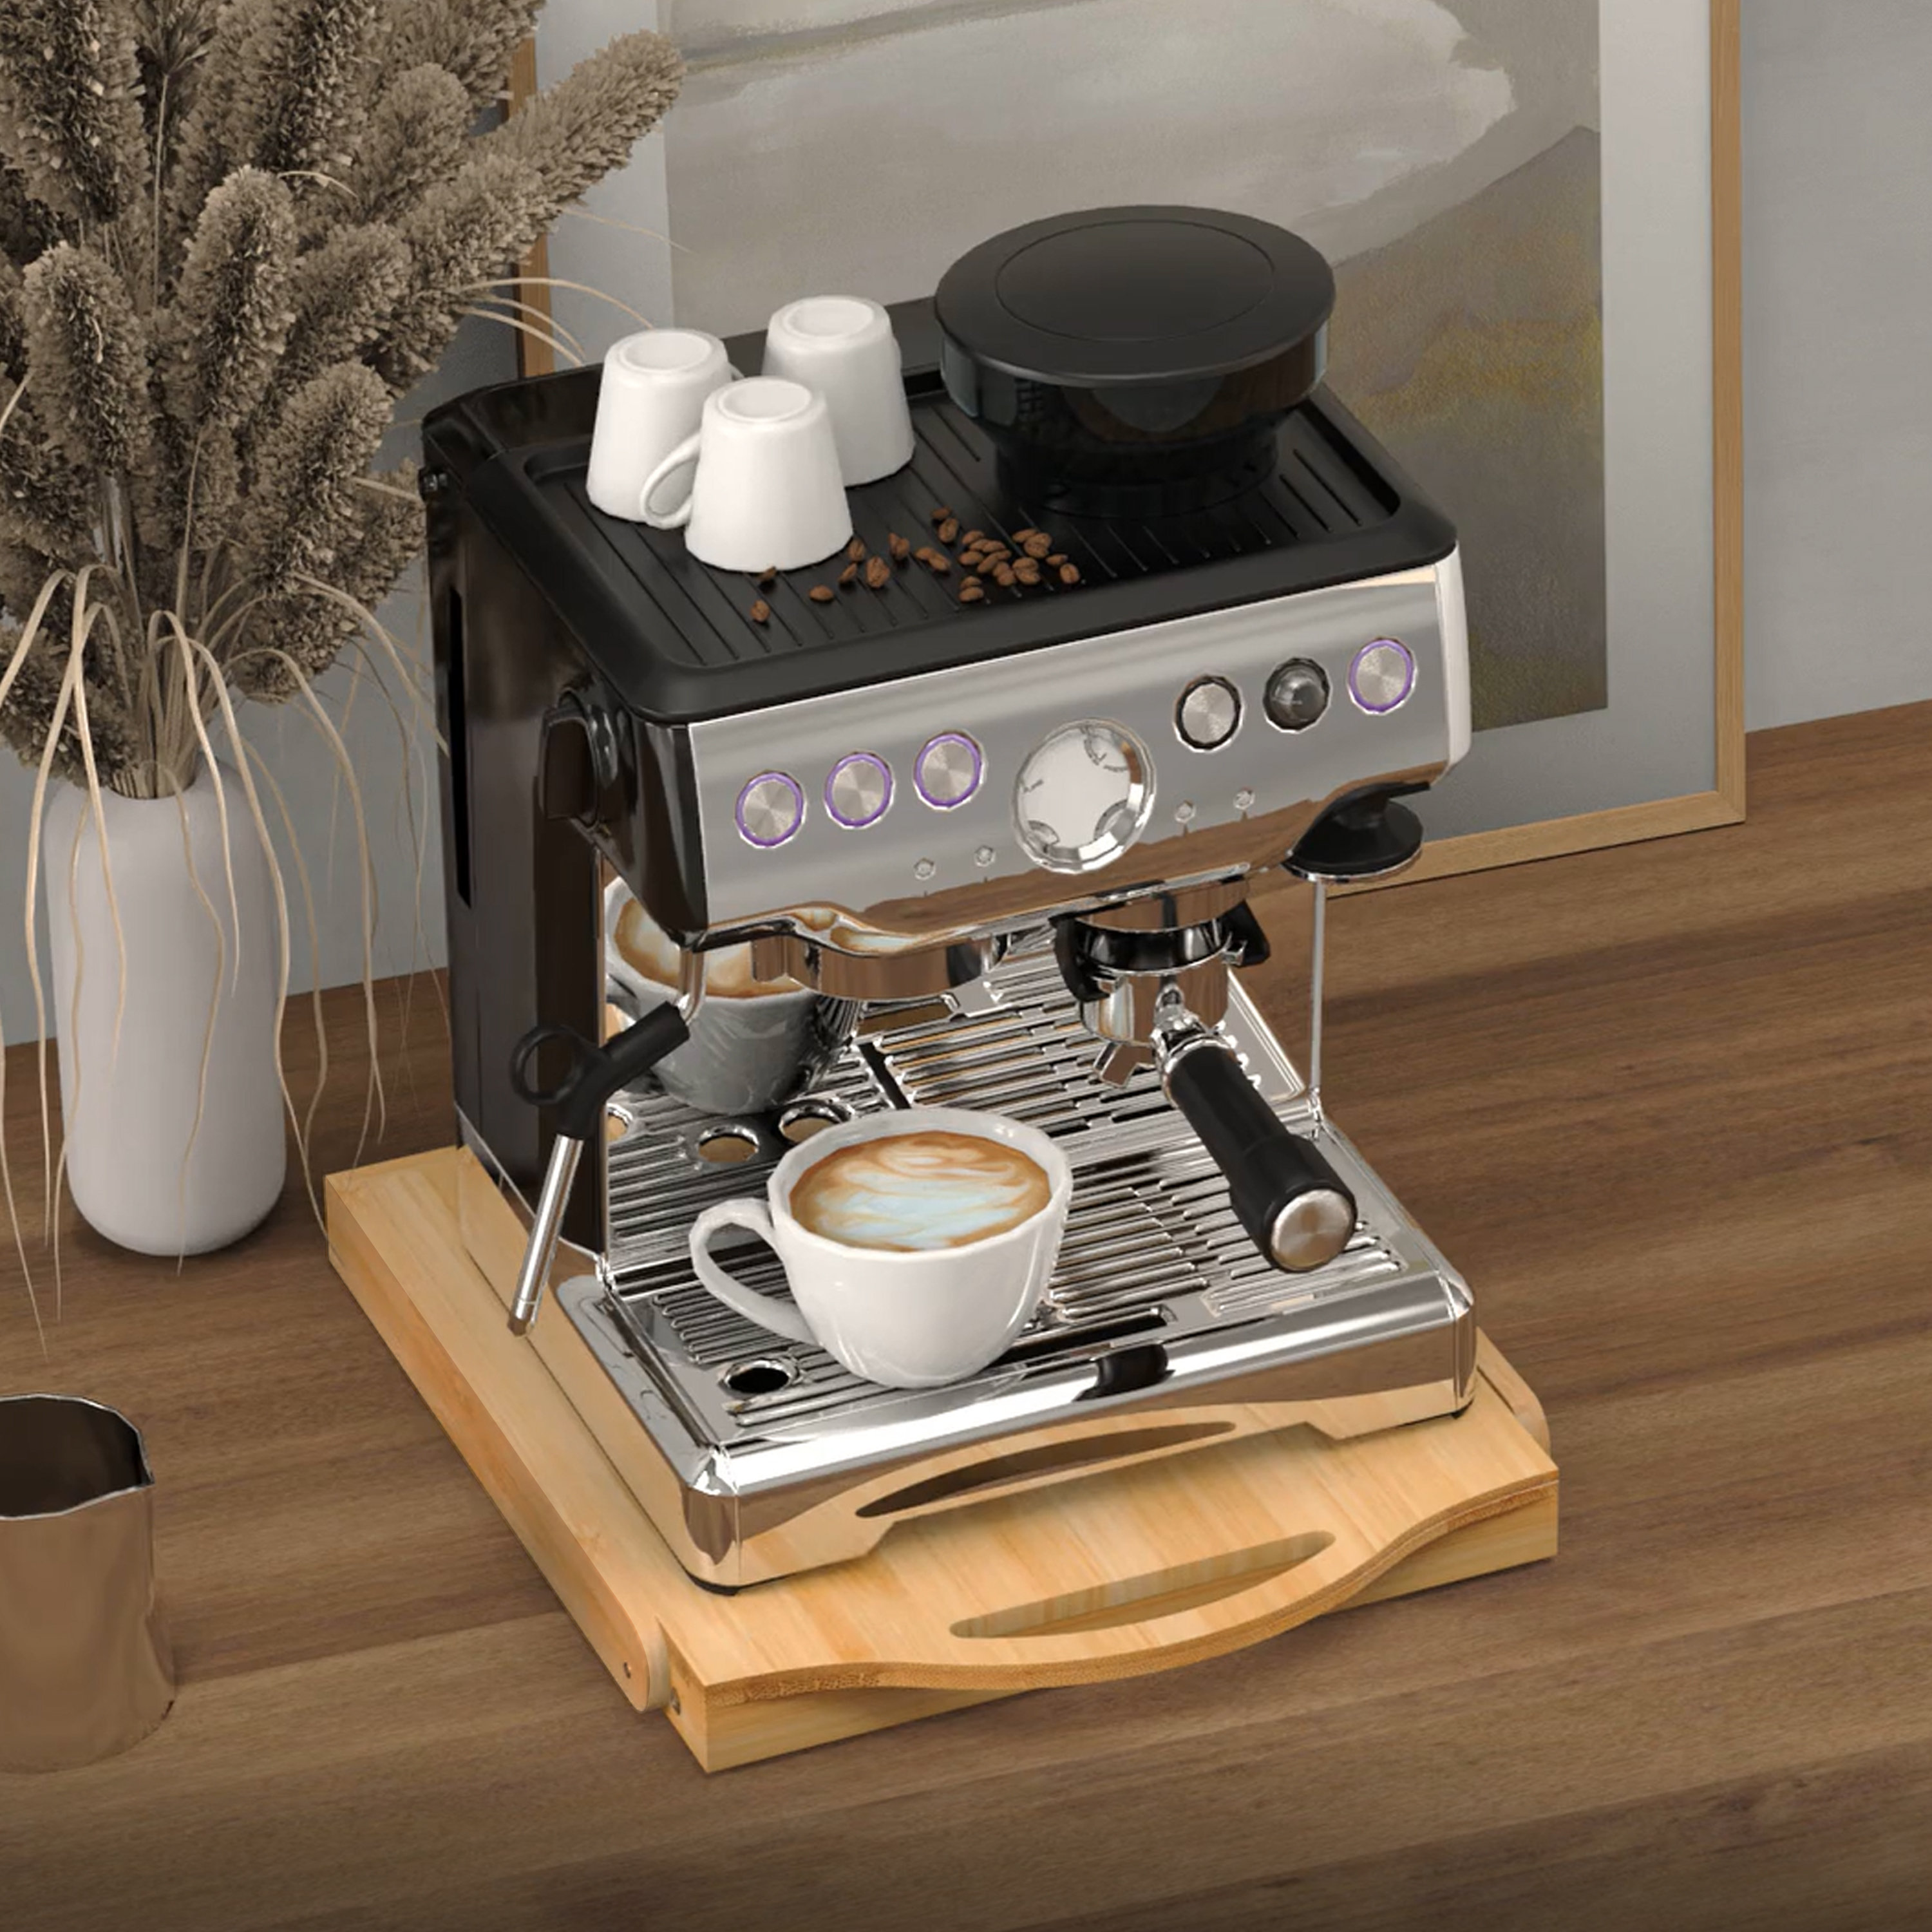 Small Appliance Slider for Kitchen Appliances - Under Cabinet Bamboo Slider  for Coffee Maker, Espresso Machine, Blender, Air Fryer, Stand Mixer